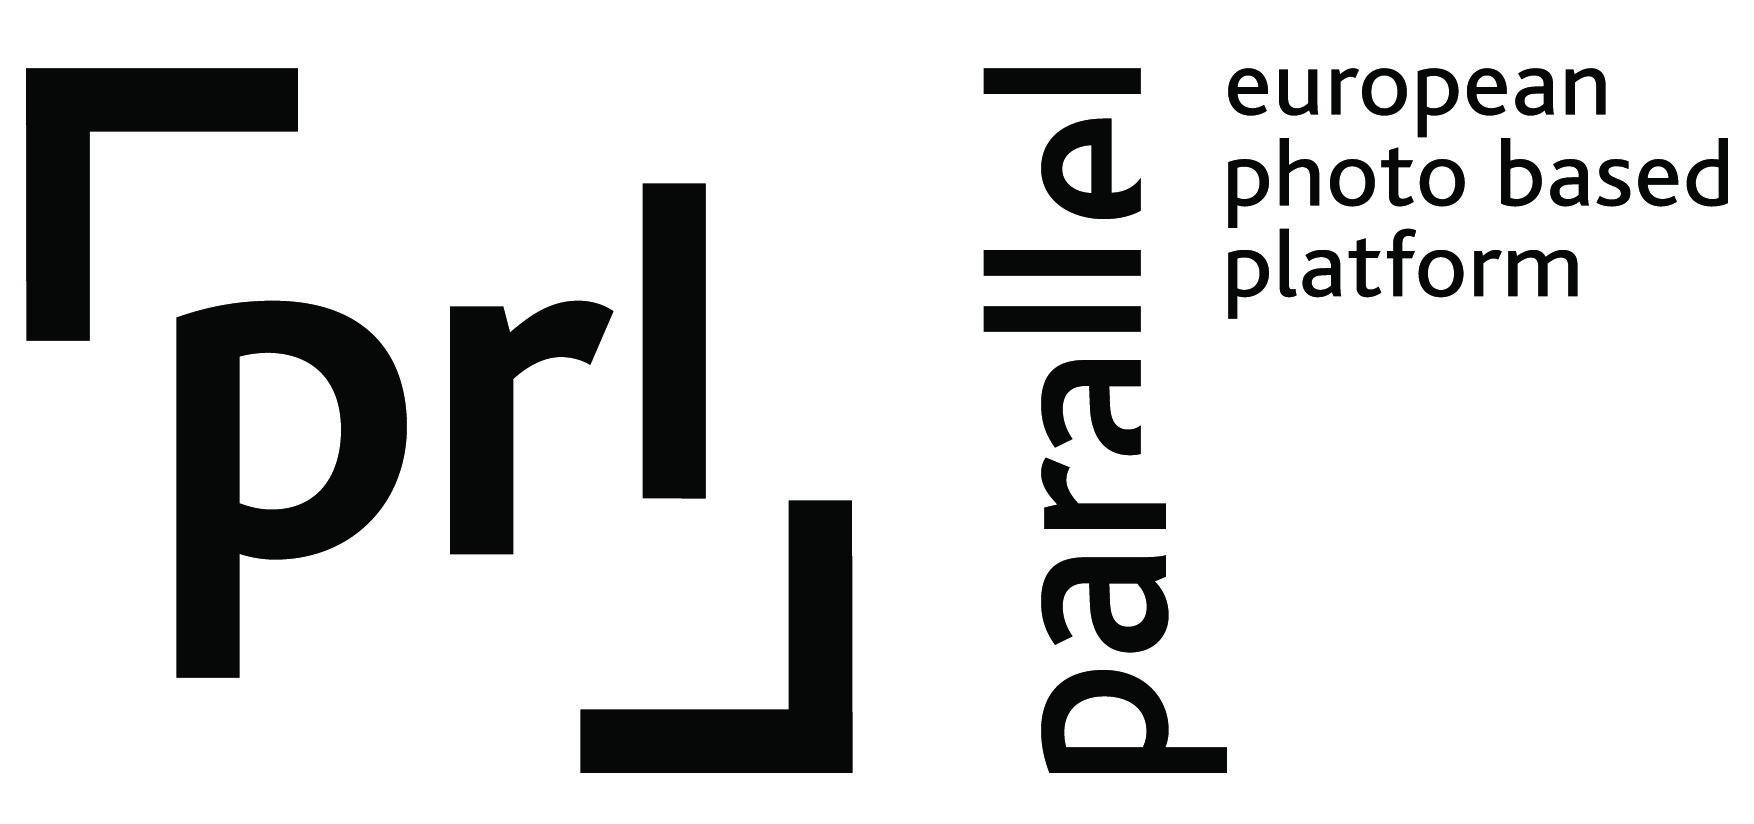 Parallel European Photo Platform